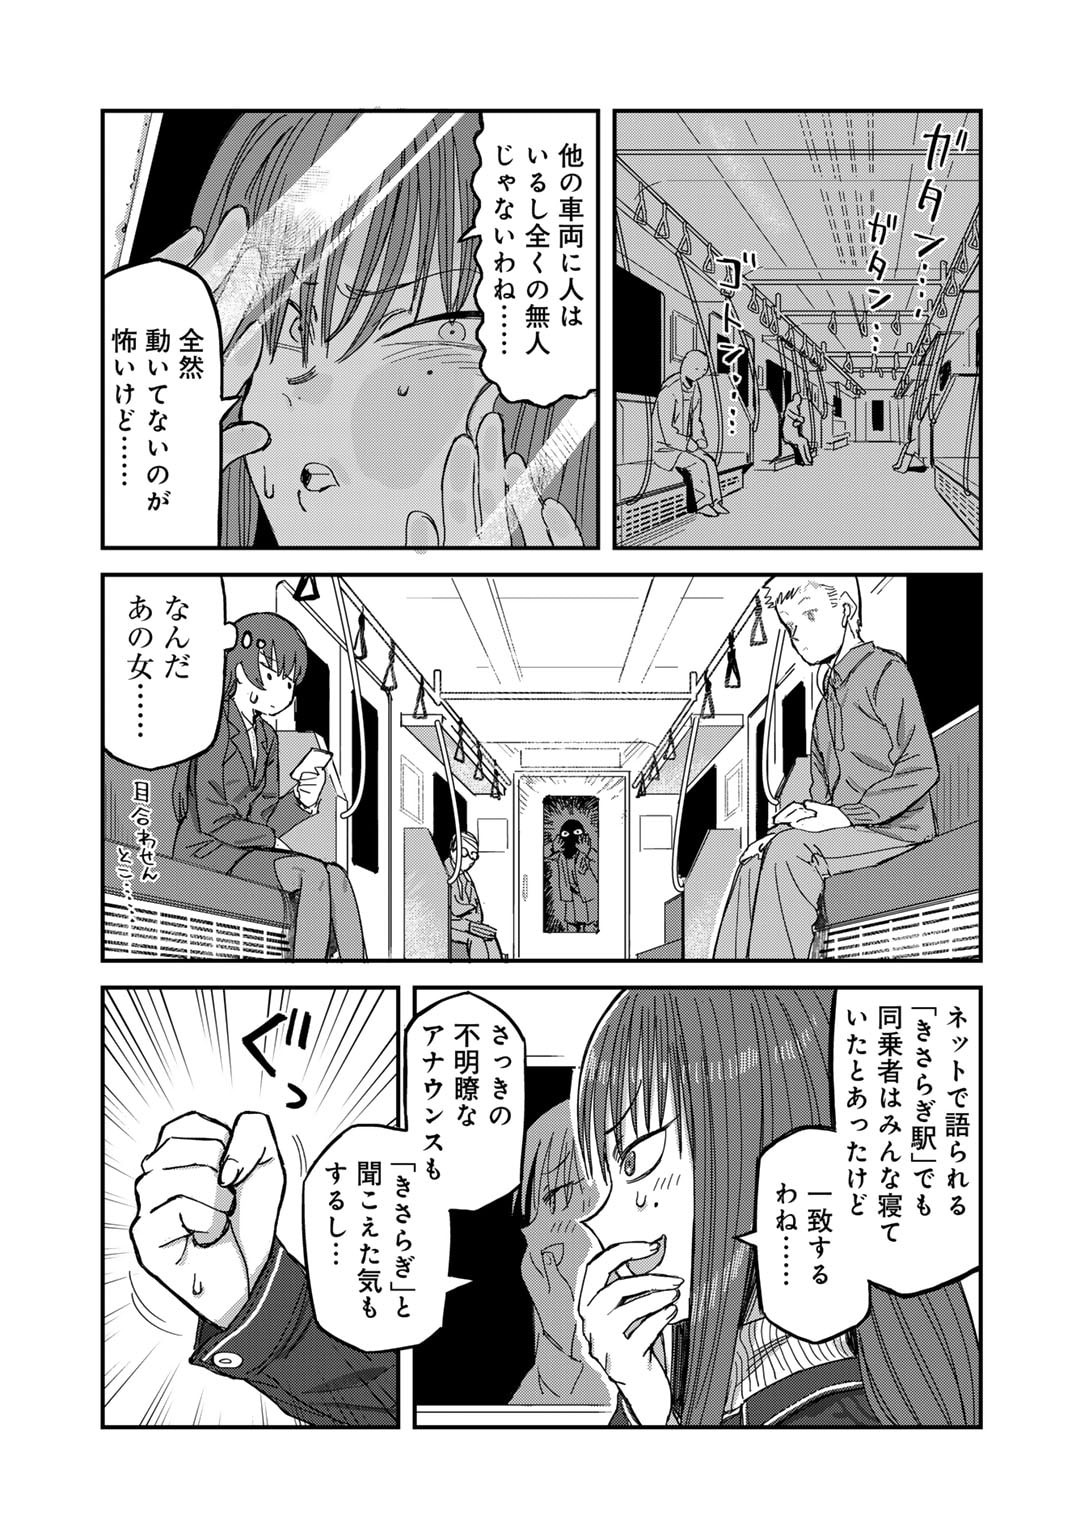 Kurono-san wa Occult ga Suki! - Chapter 4 - Page 11